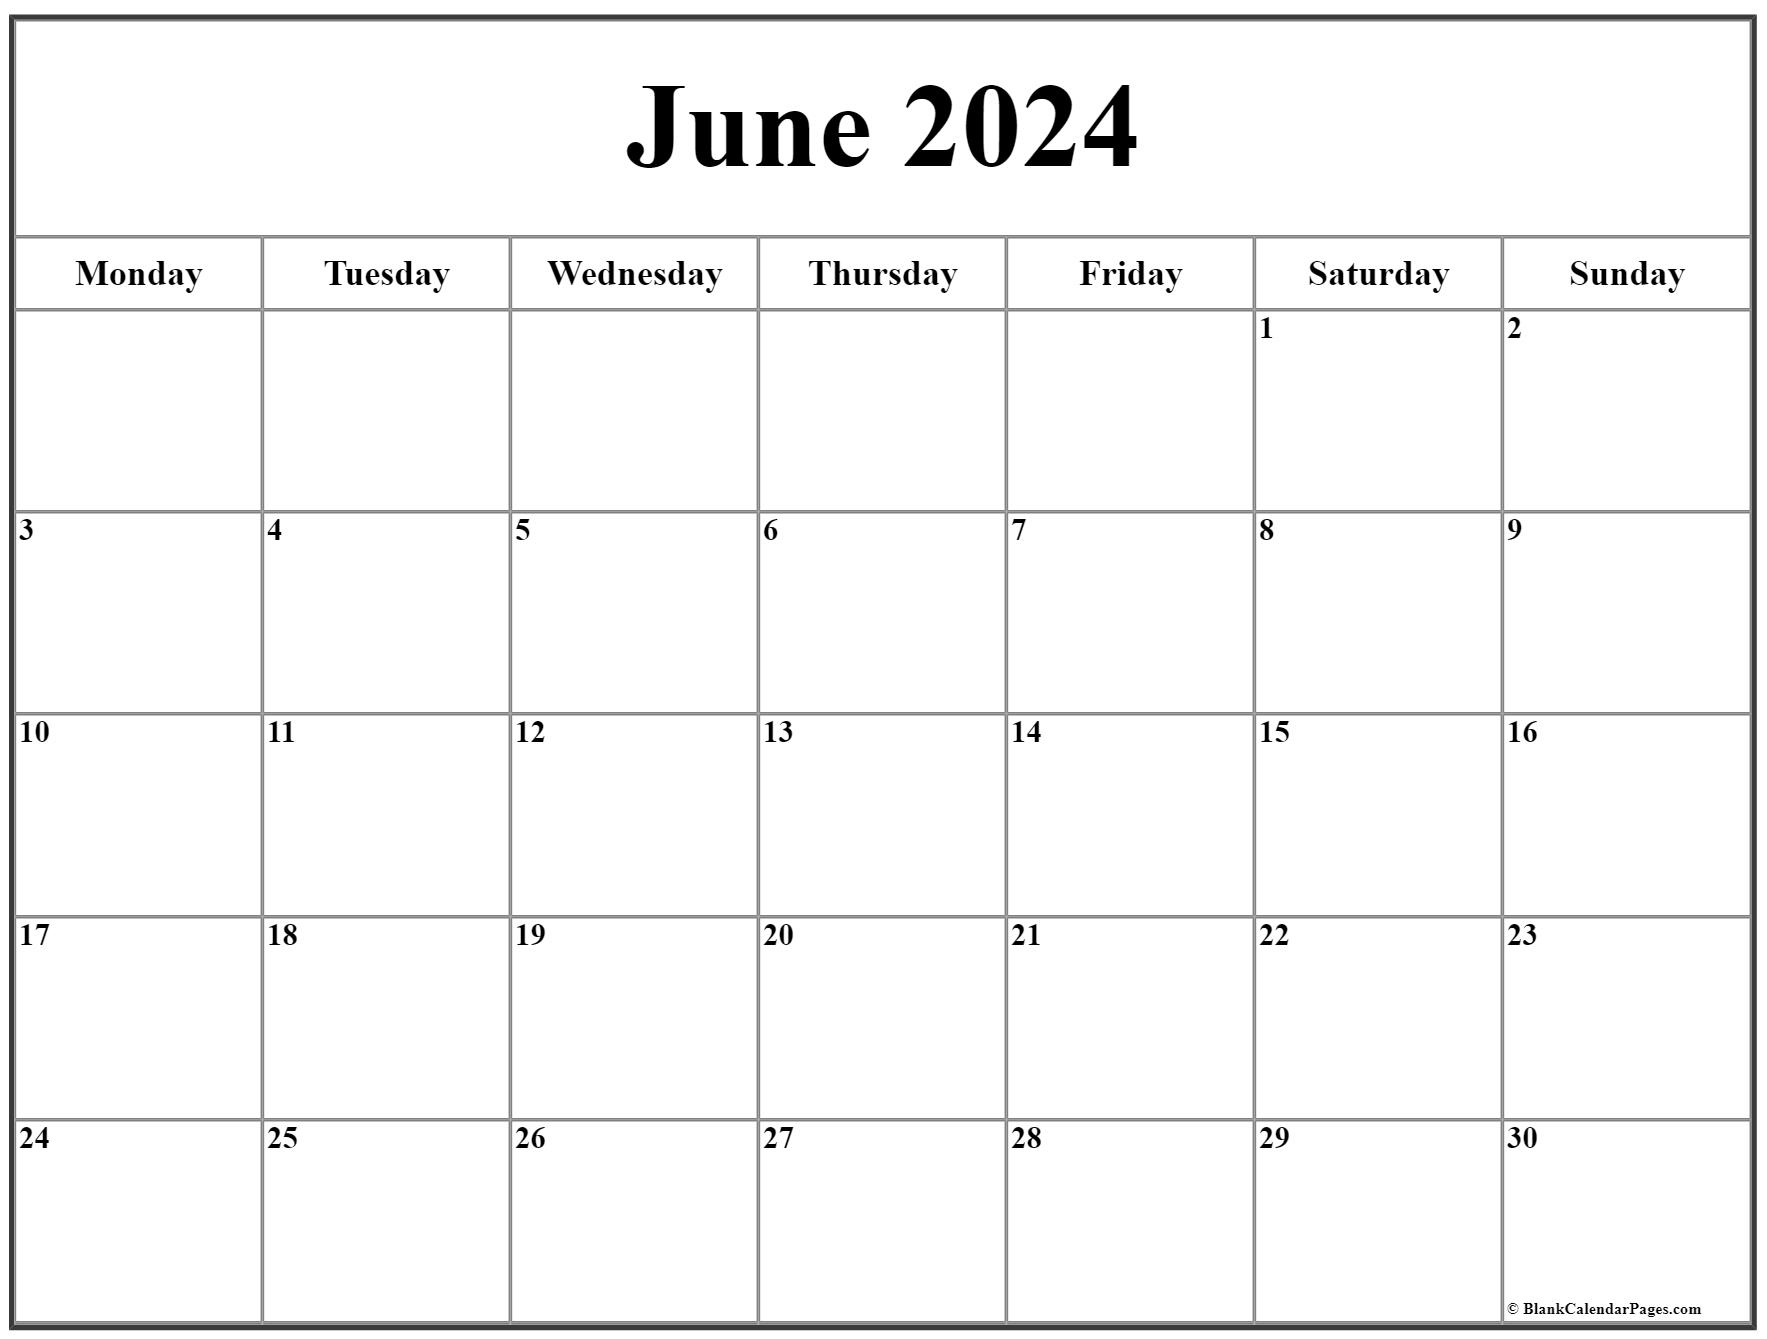 June 2024 Monday Calendar | Monday To Sunday for June 2024 Weekly Calendar Printable